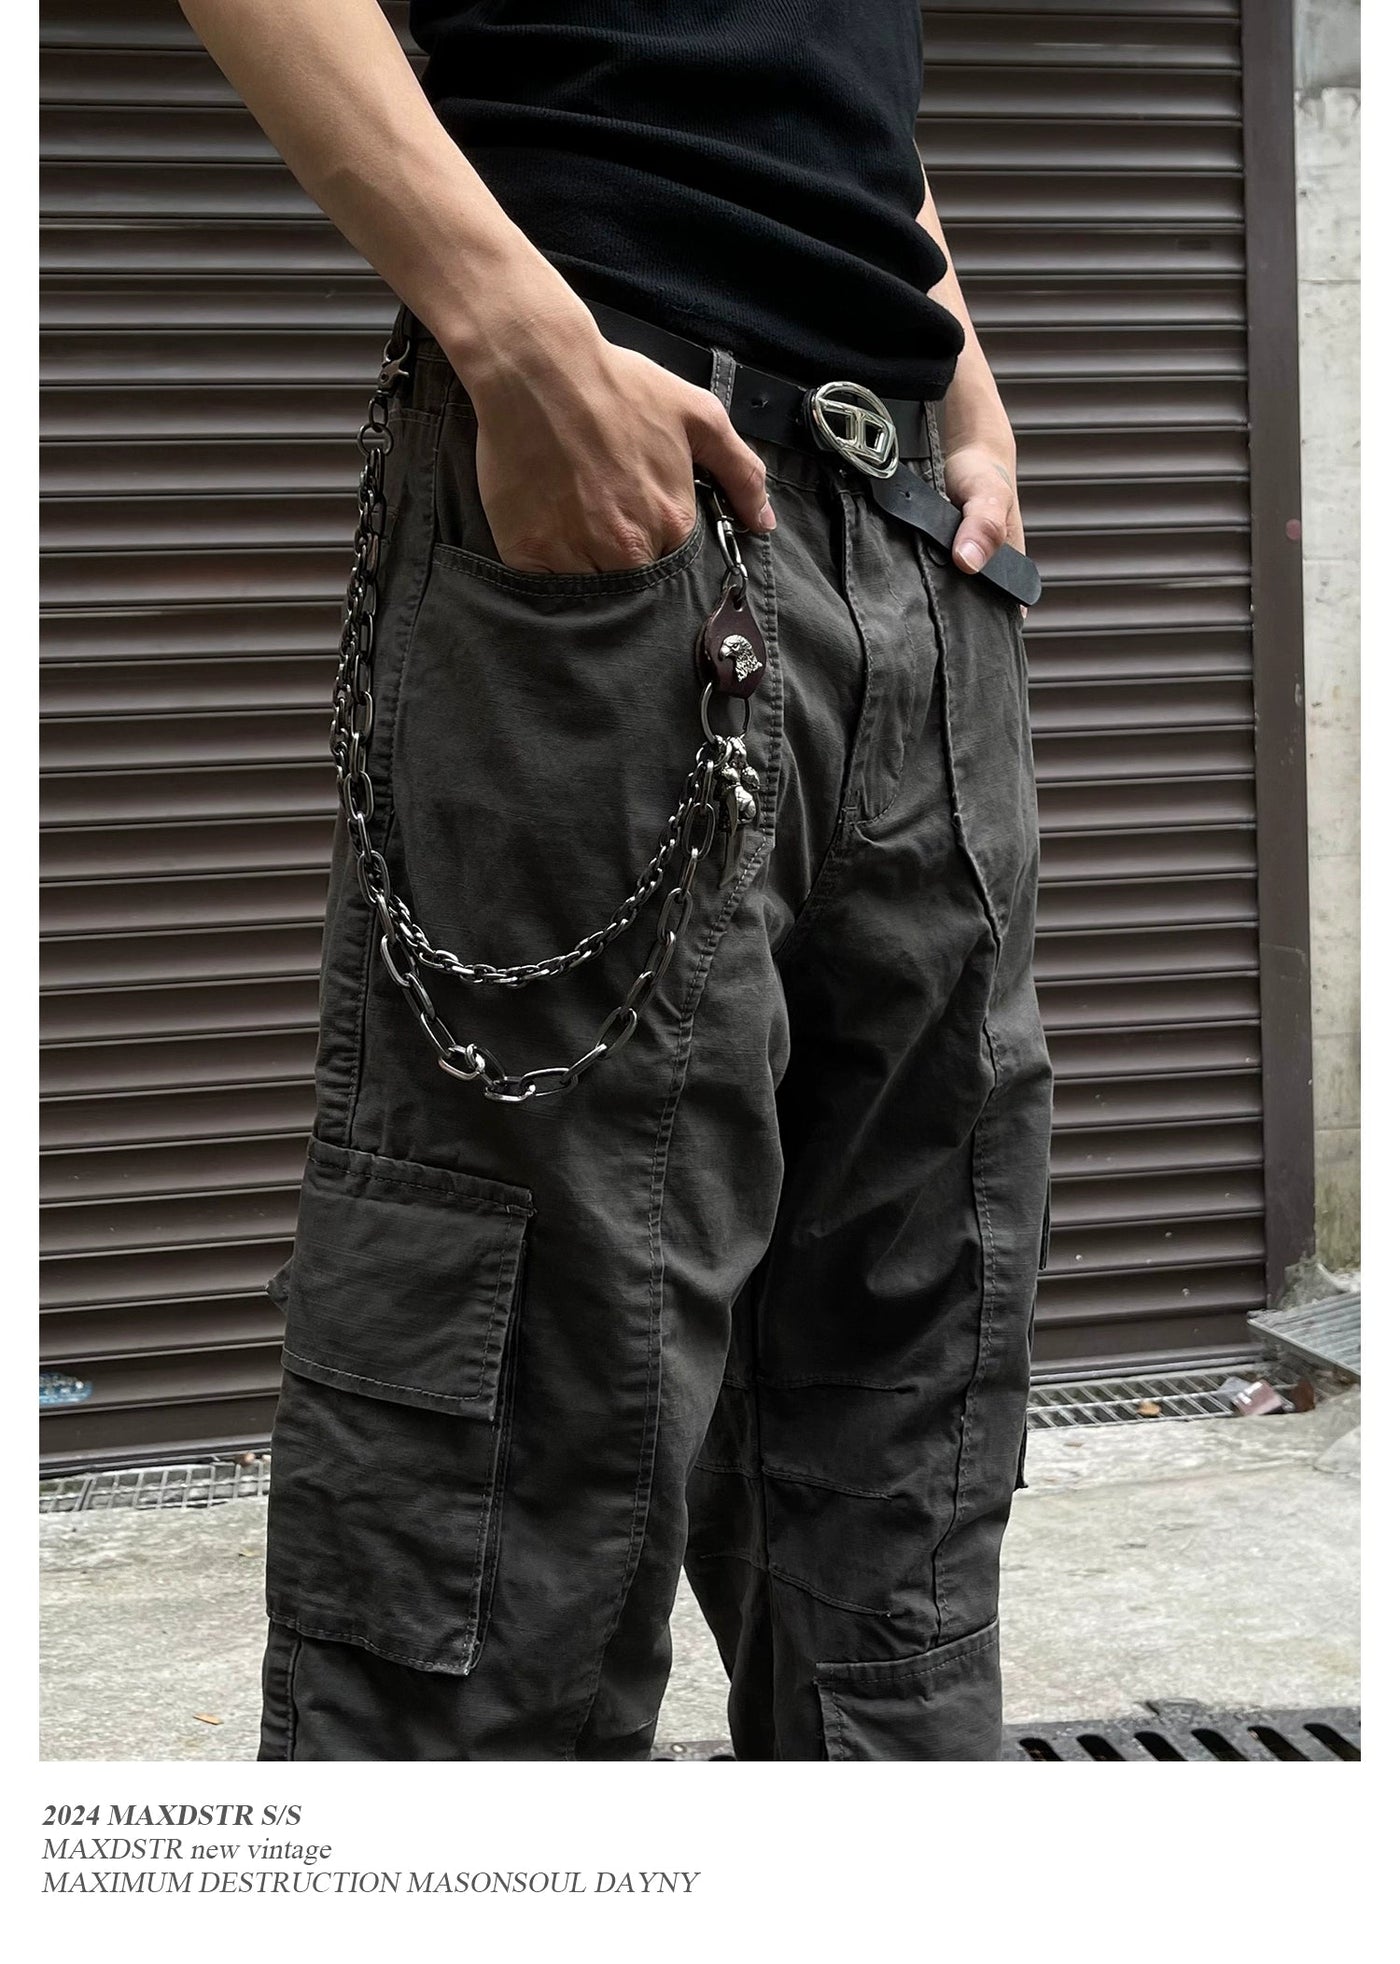 Heavy Multi-Pocket Cargo Pants Korean Street Fashion Pants By MaxDstr Shop Online at OH Vault